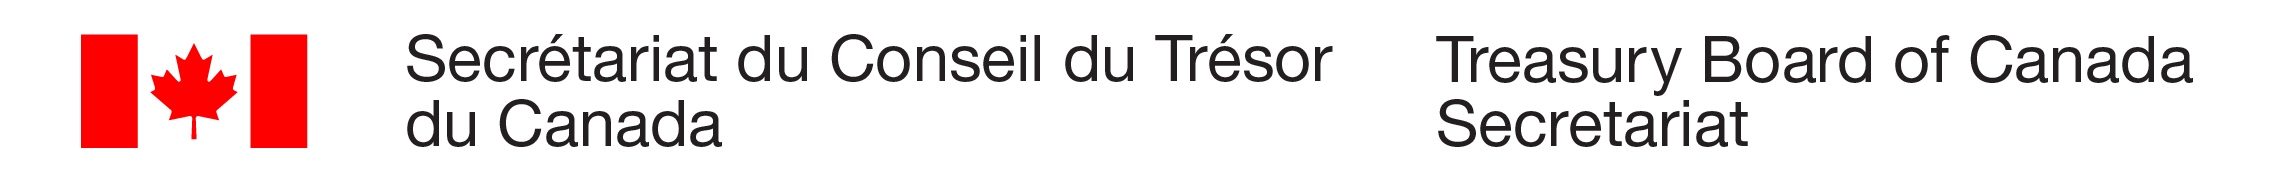 Treasury Board of Canada logo